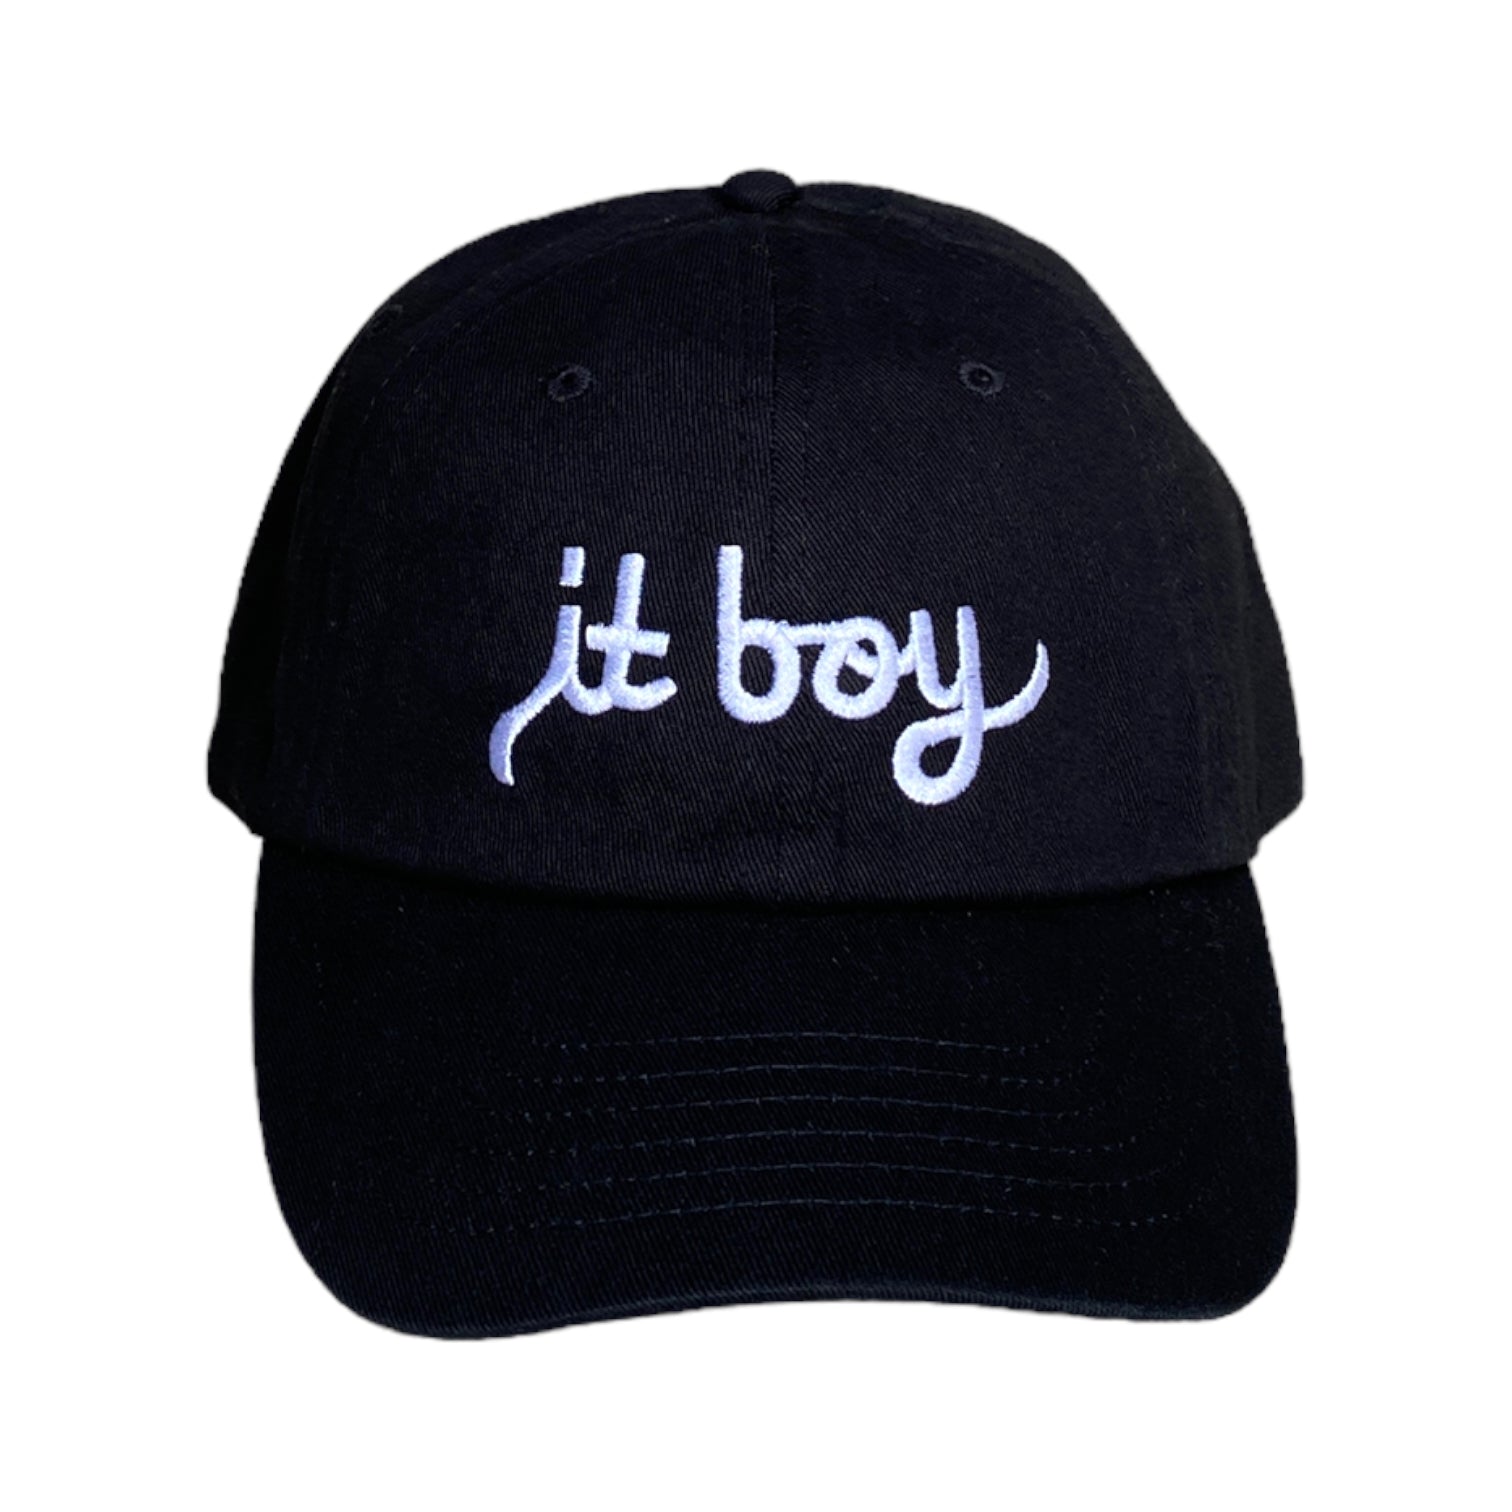 IT GIRL/BOY/THEY ball caps